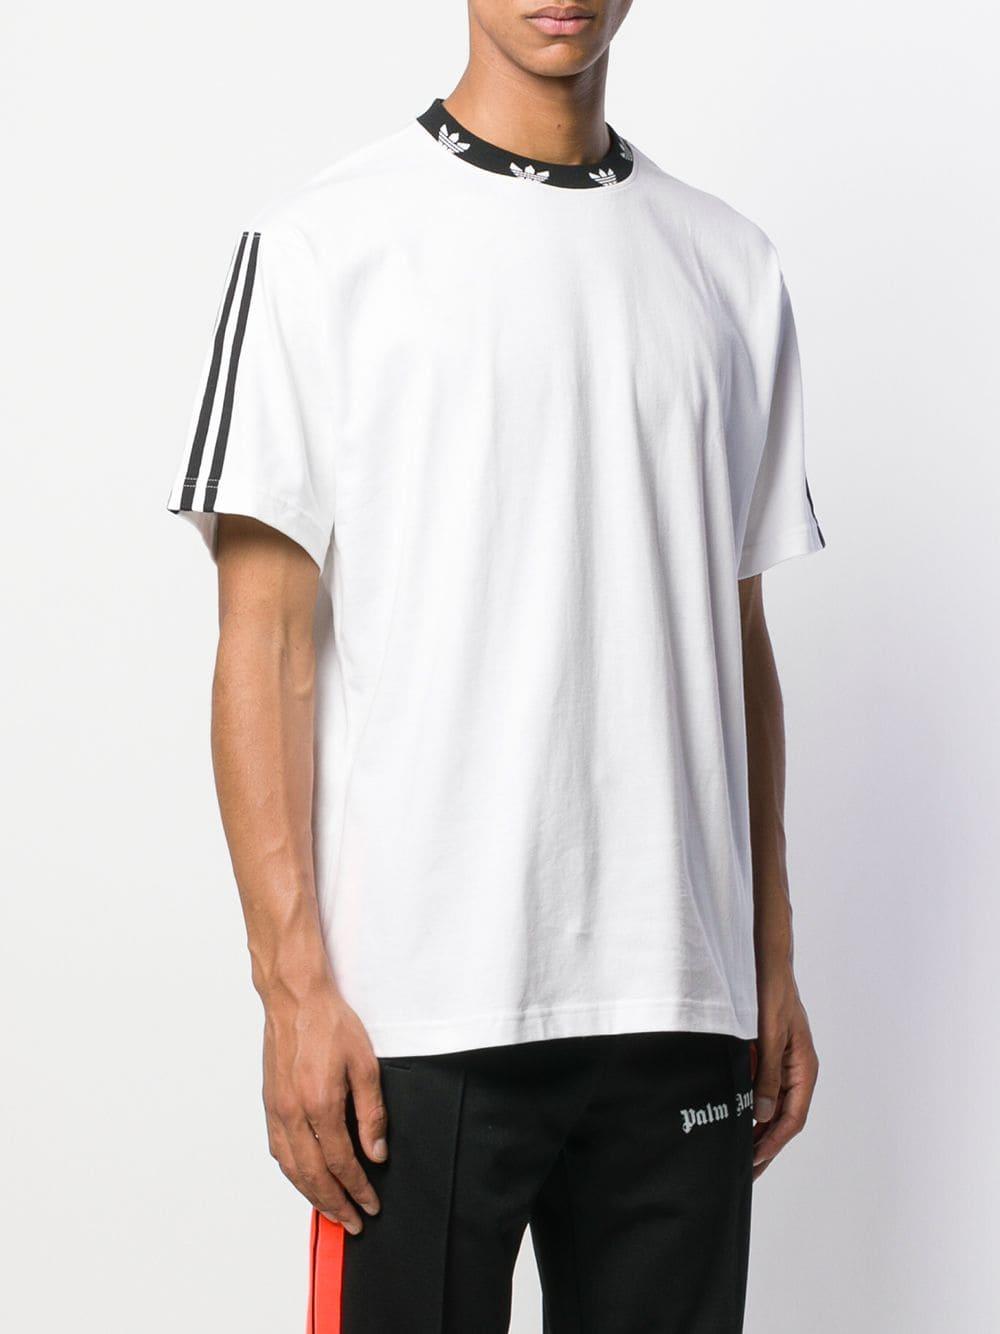 Adidas Logo Print Short Sleeved Crewneck T-Shirt